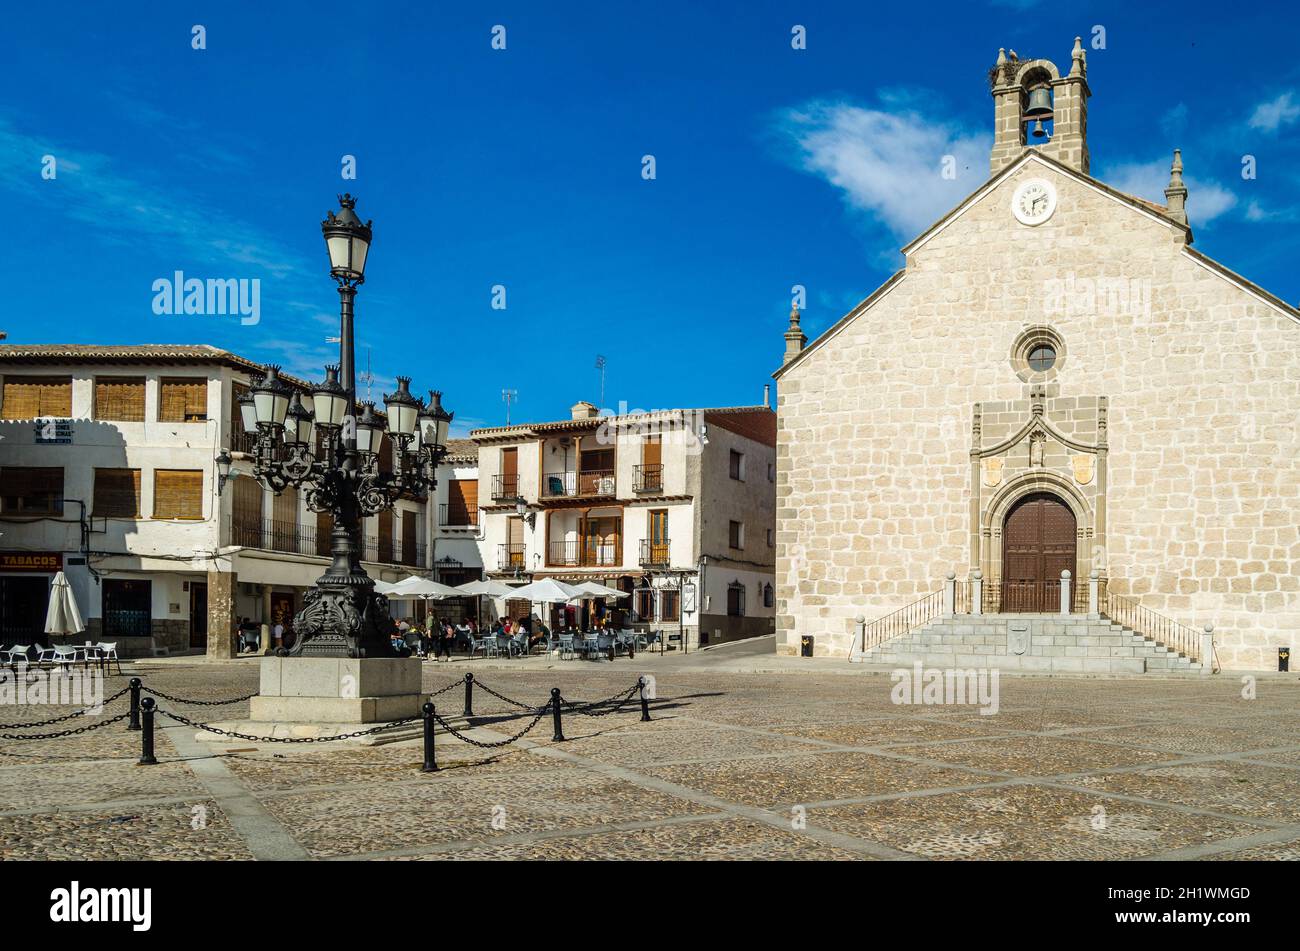 LA PUEBLA DE MONTALBAN, SPAIN - MAY 16, 2021: Main square of La Puebla de Montalban, a village in Toledo province, Castilla La Mancha, Spain Stock Photo